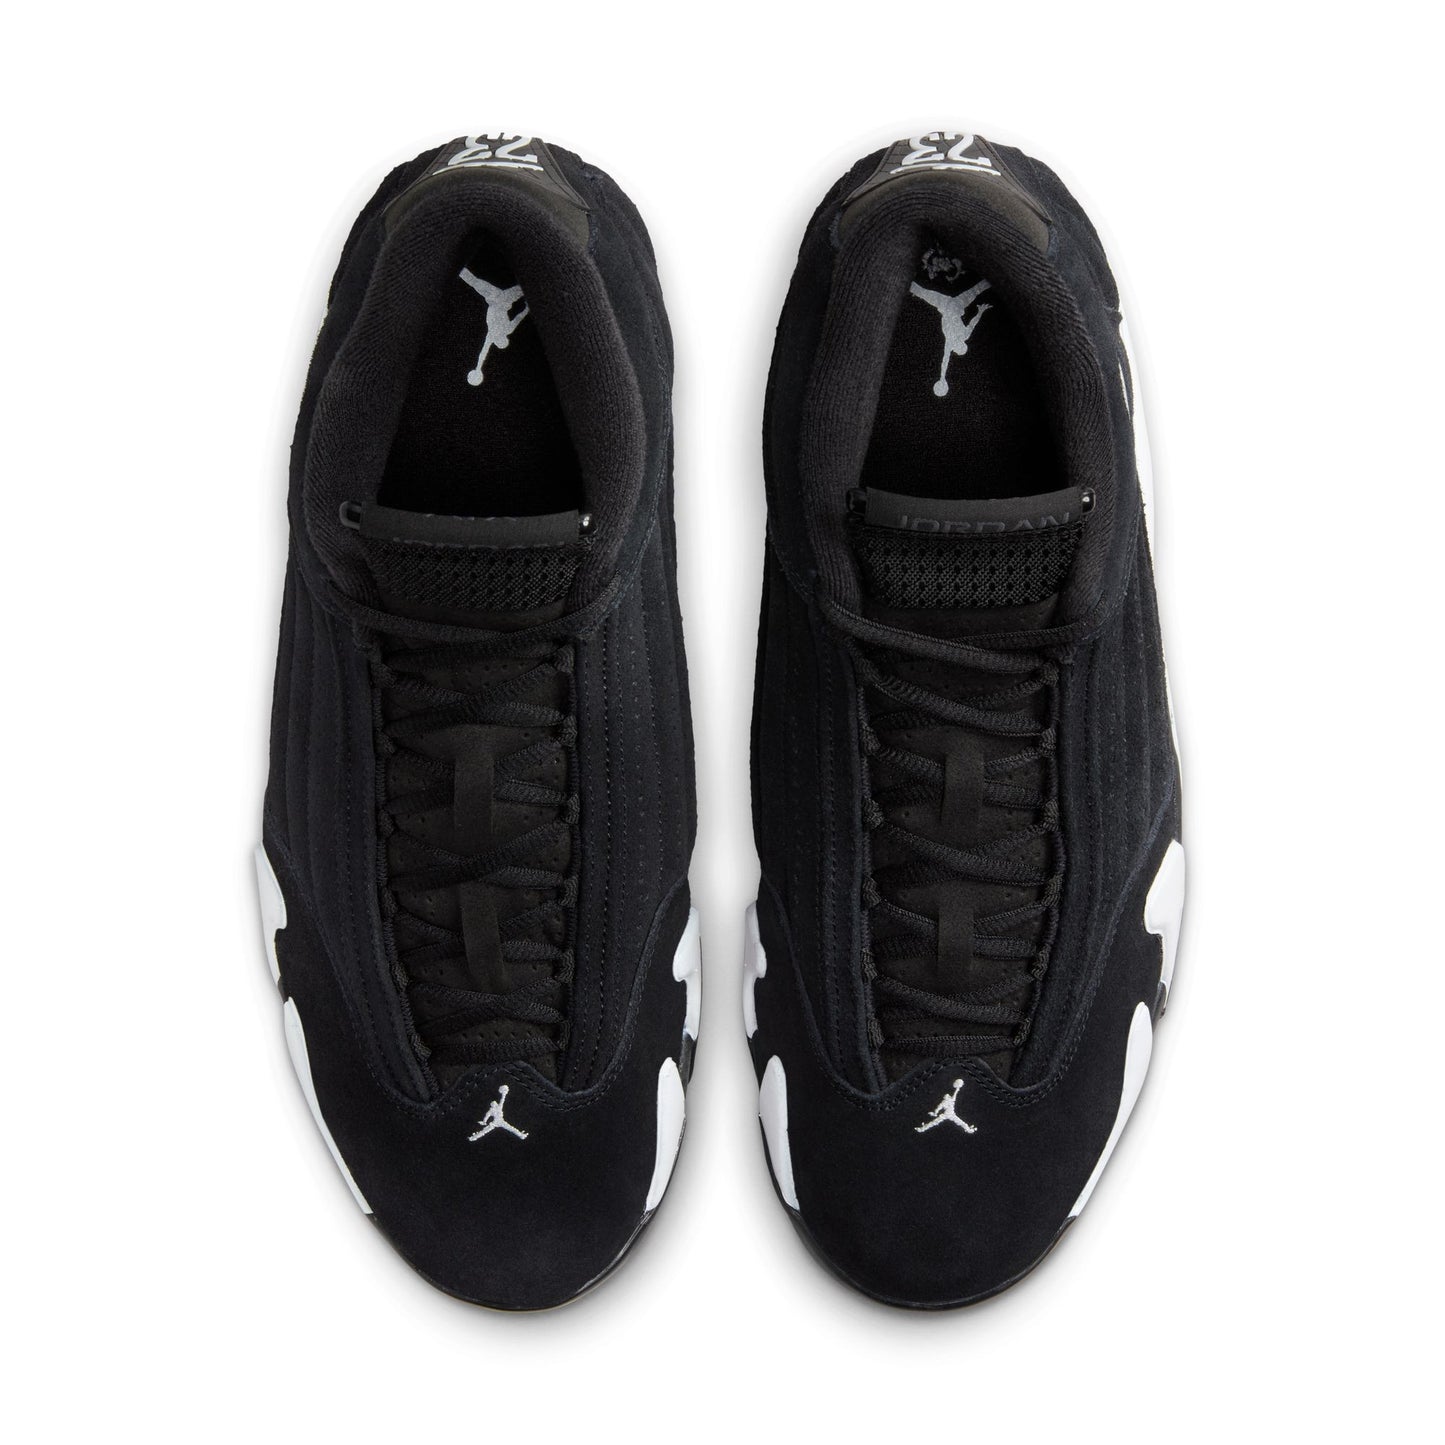 Air Jordan 14 Retro "Black/White" - 487471-016